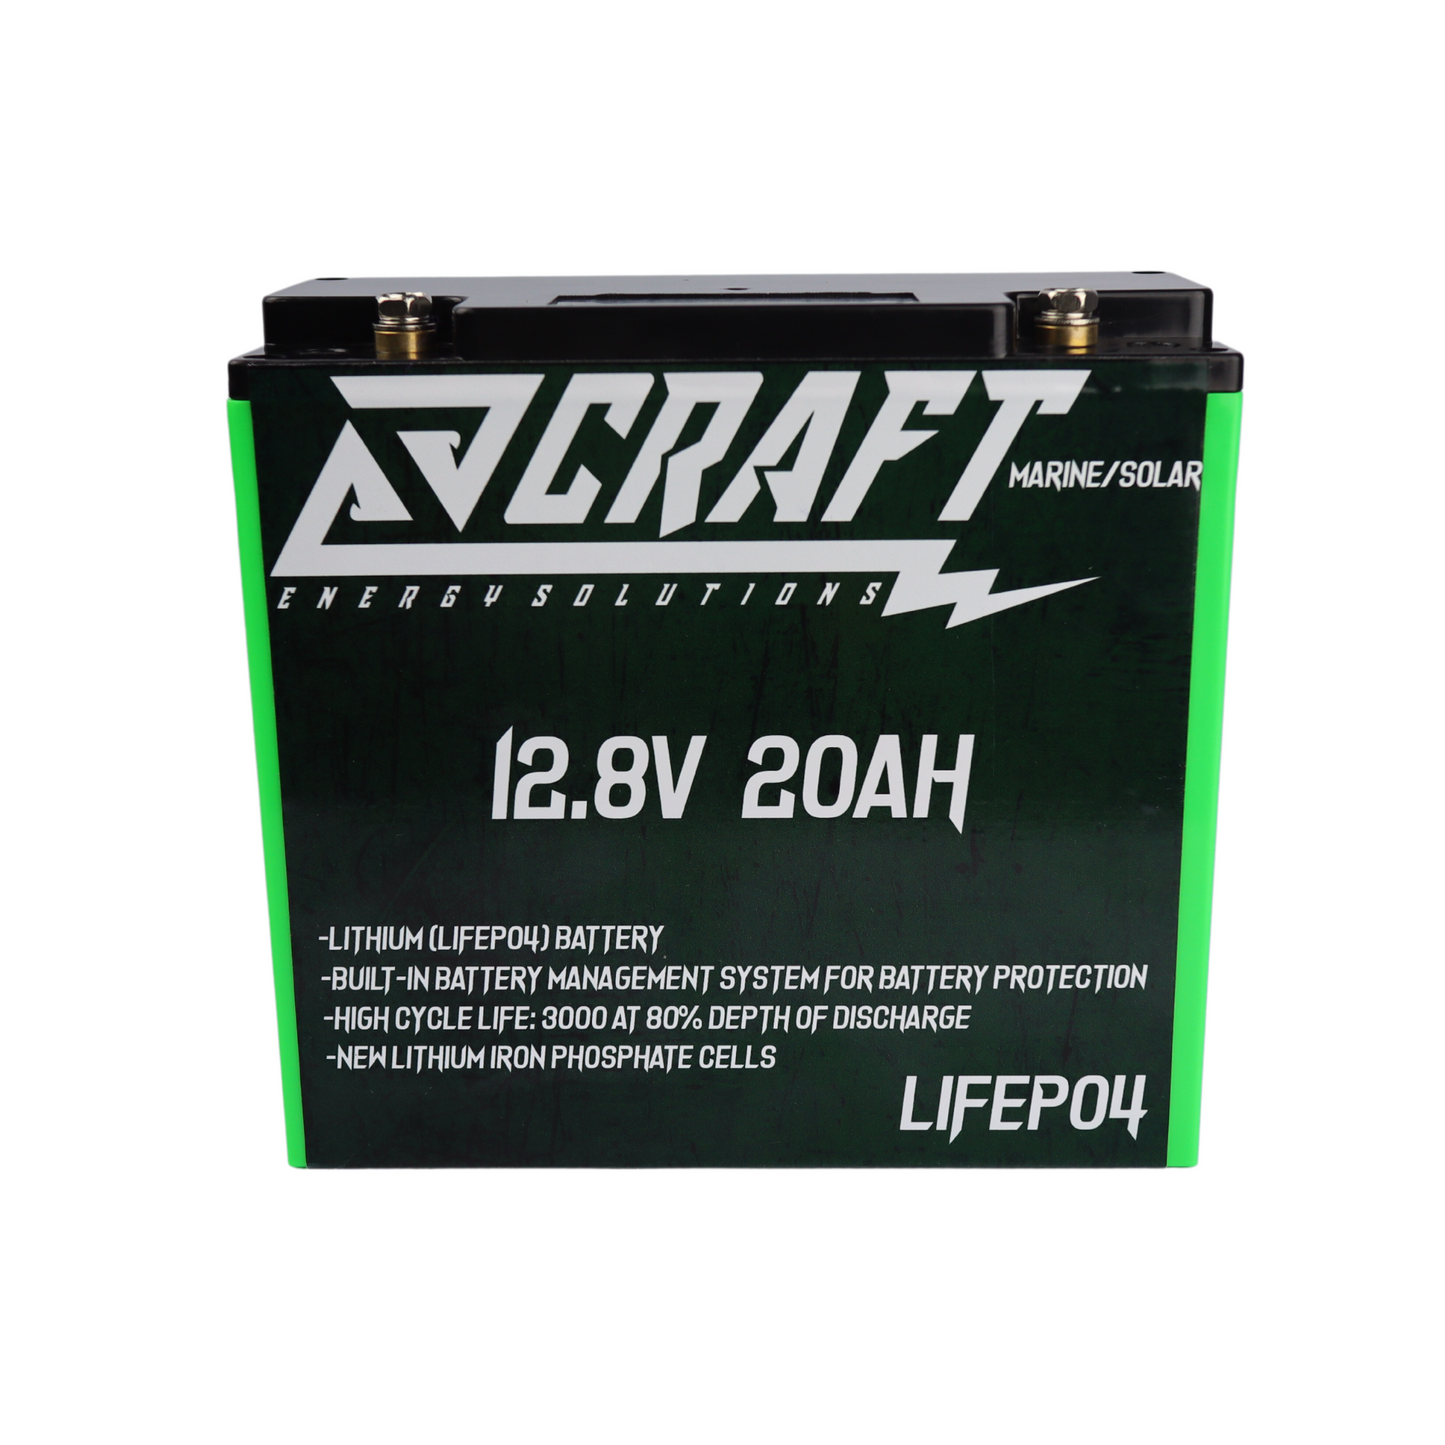 20AH Lithium Battery